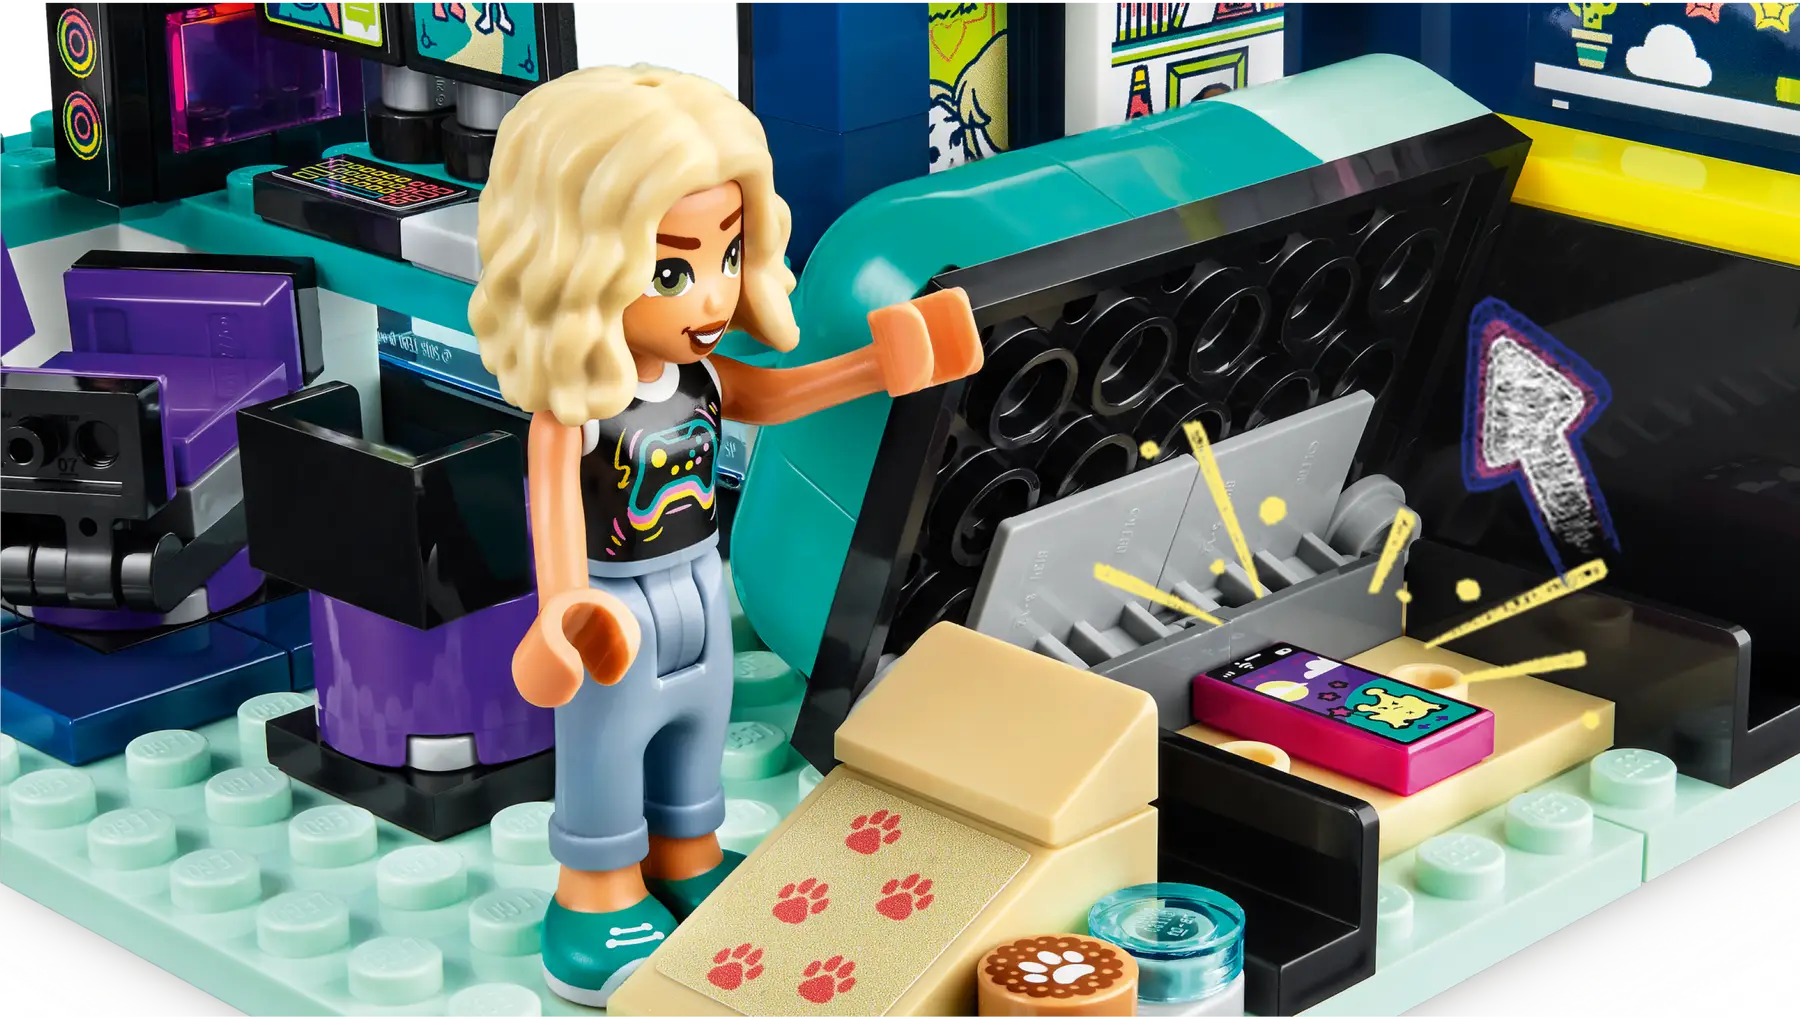 Lego Friends - Nova's Room